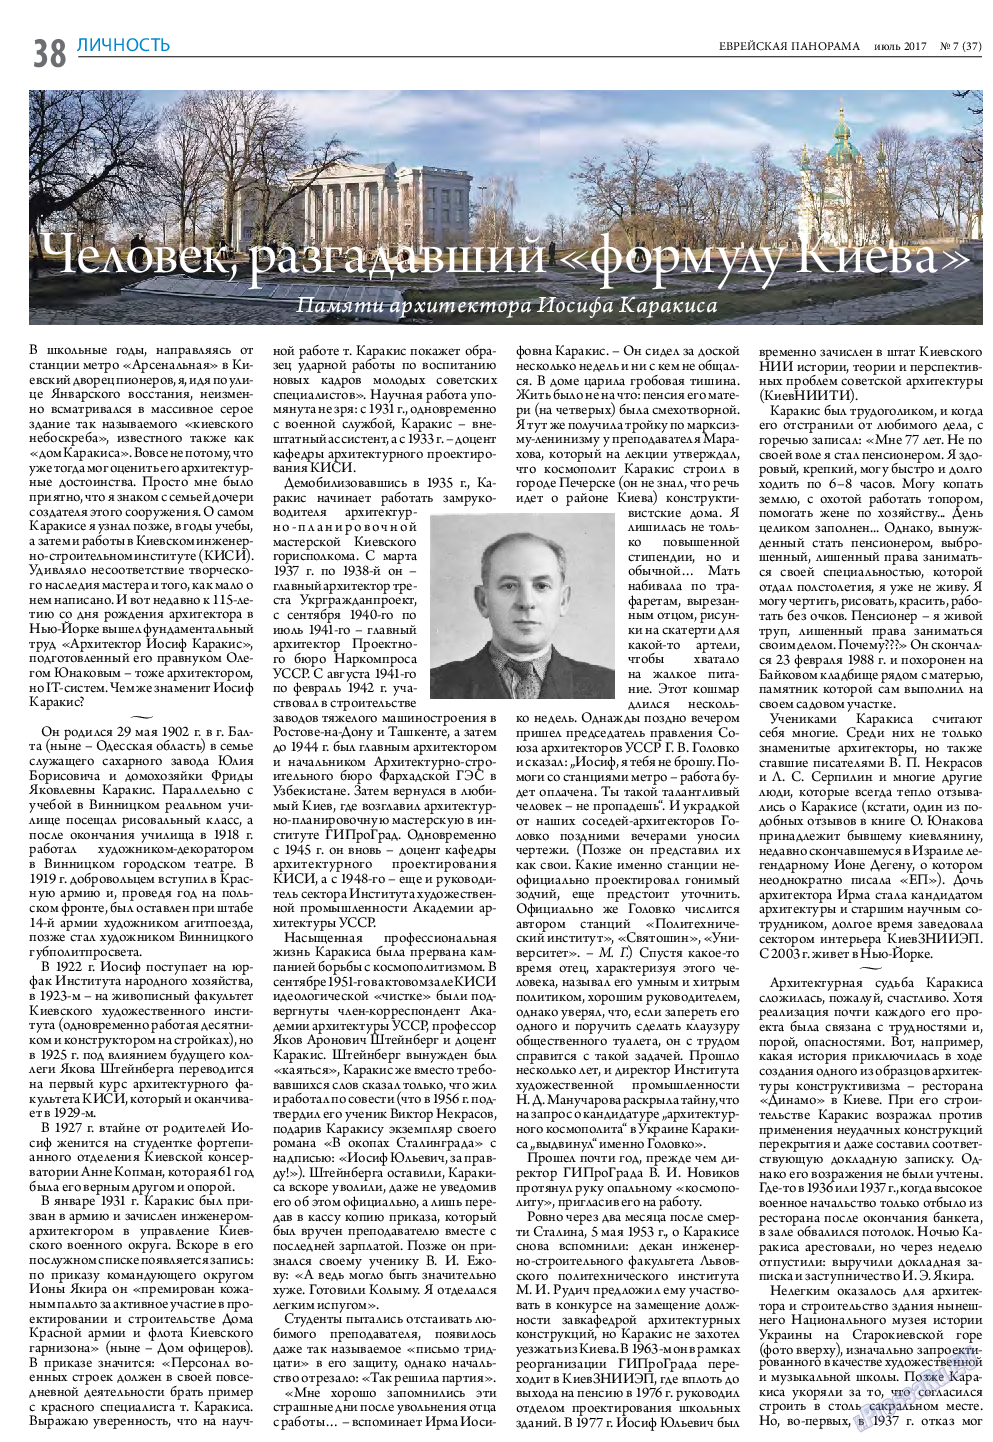 Еврейская панорама, газета. 2017 №7 стр.38